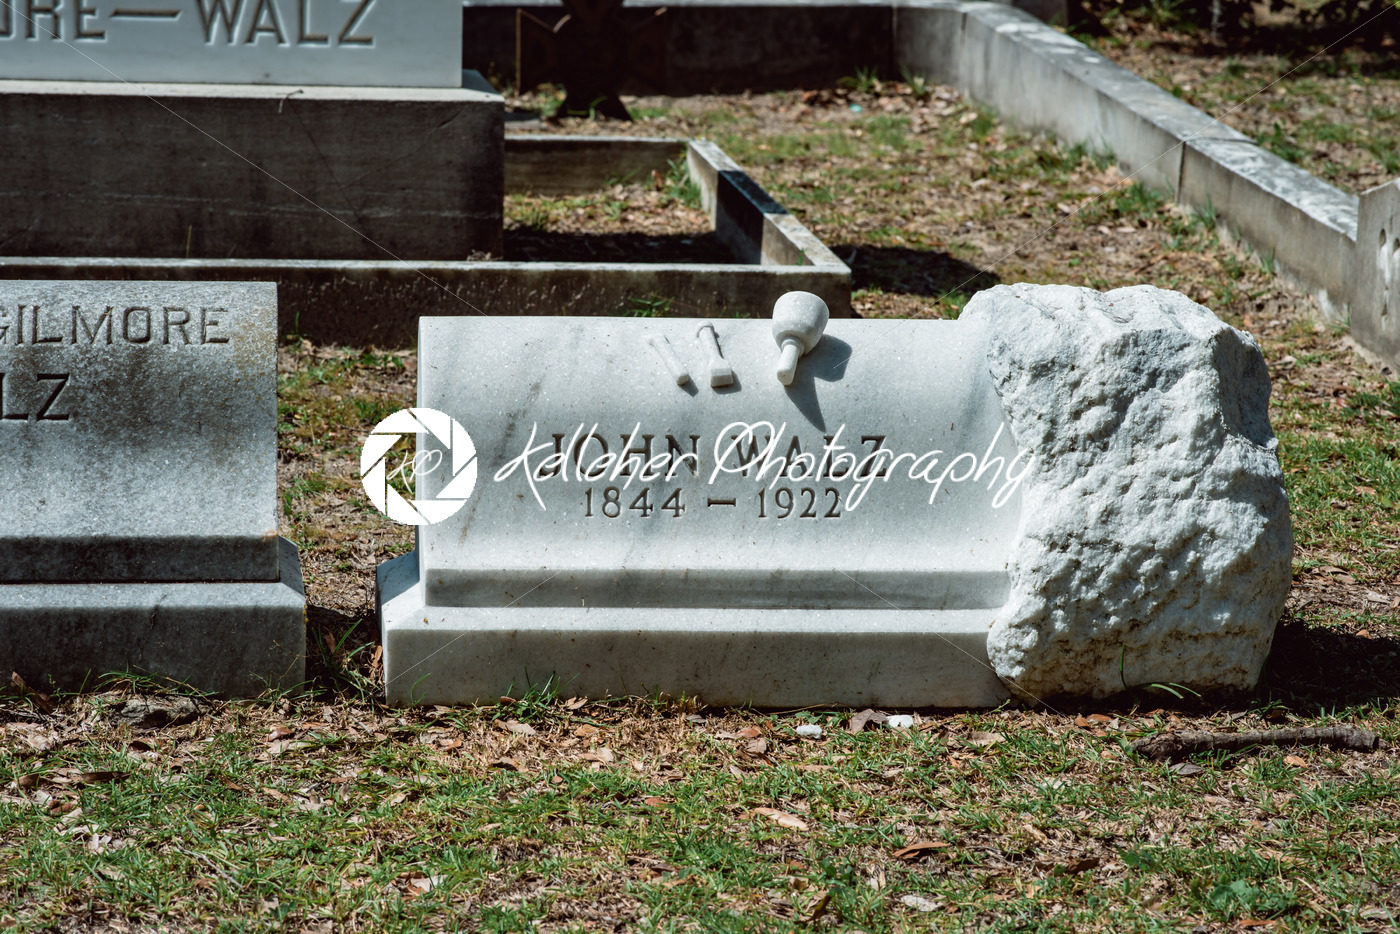 John Walz Cemetery Statuary Statue Bonaventure Cemetery Savannah Georgia - Kelleher Photography Store